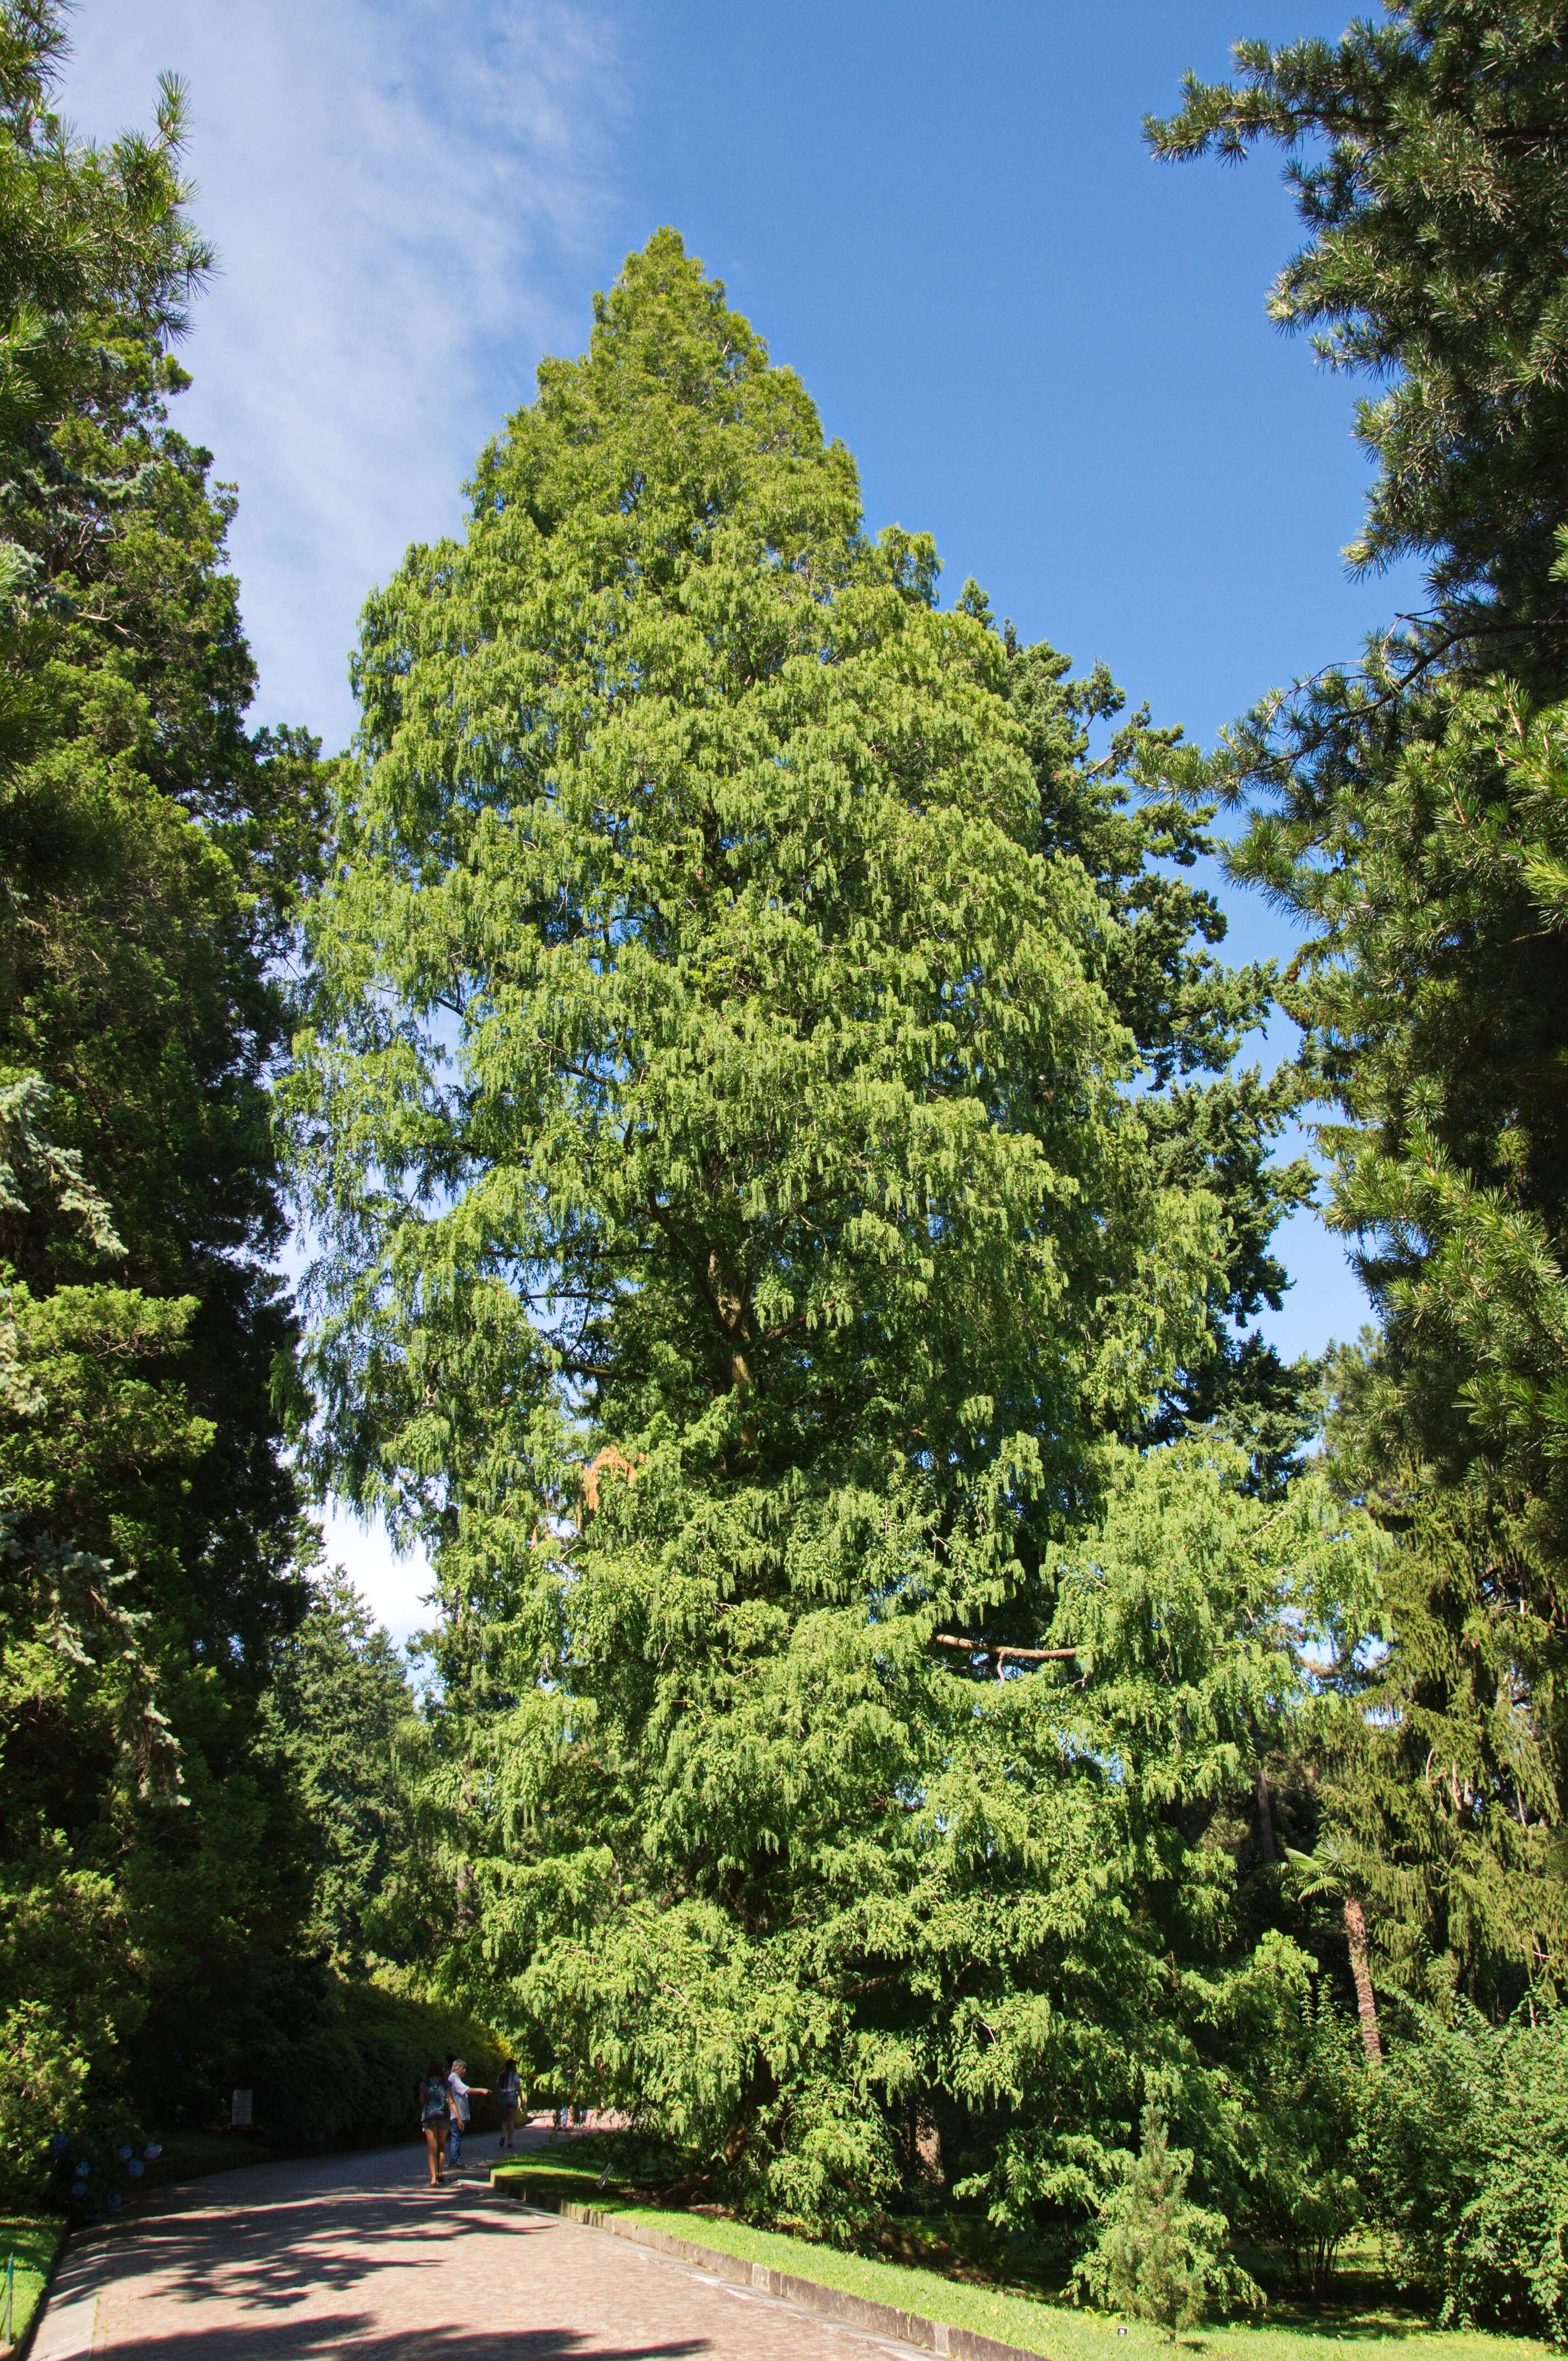 Image of dawn redwood